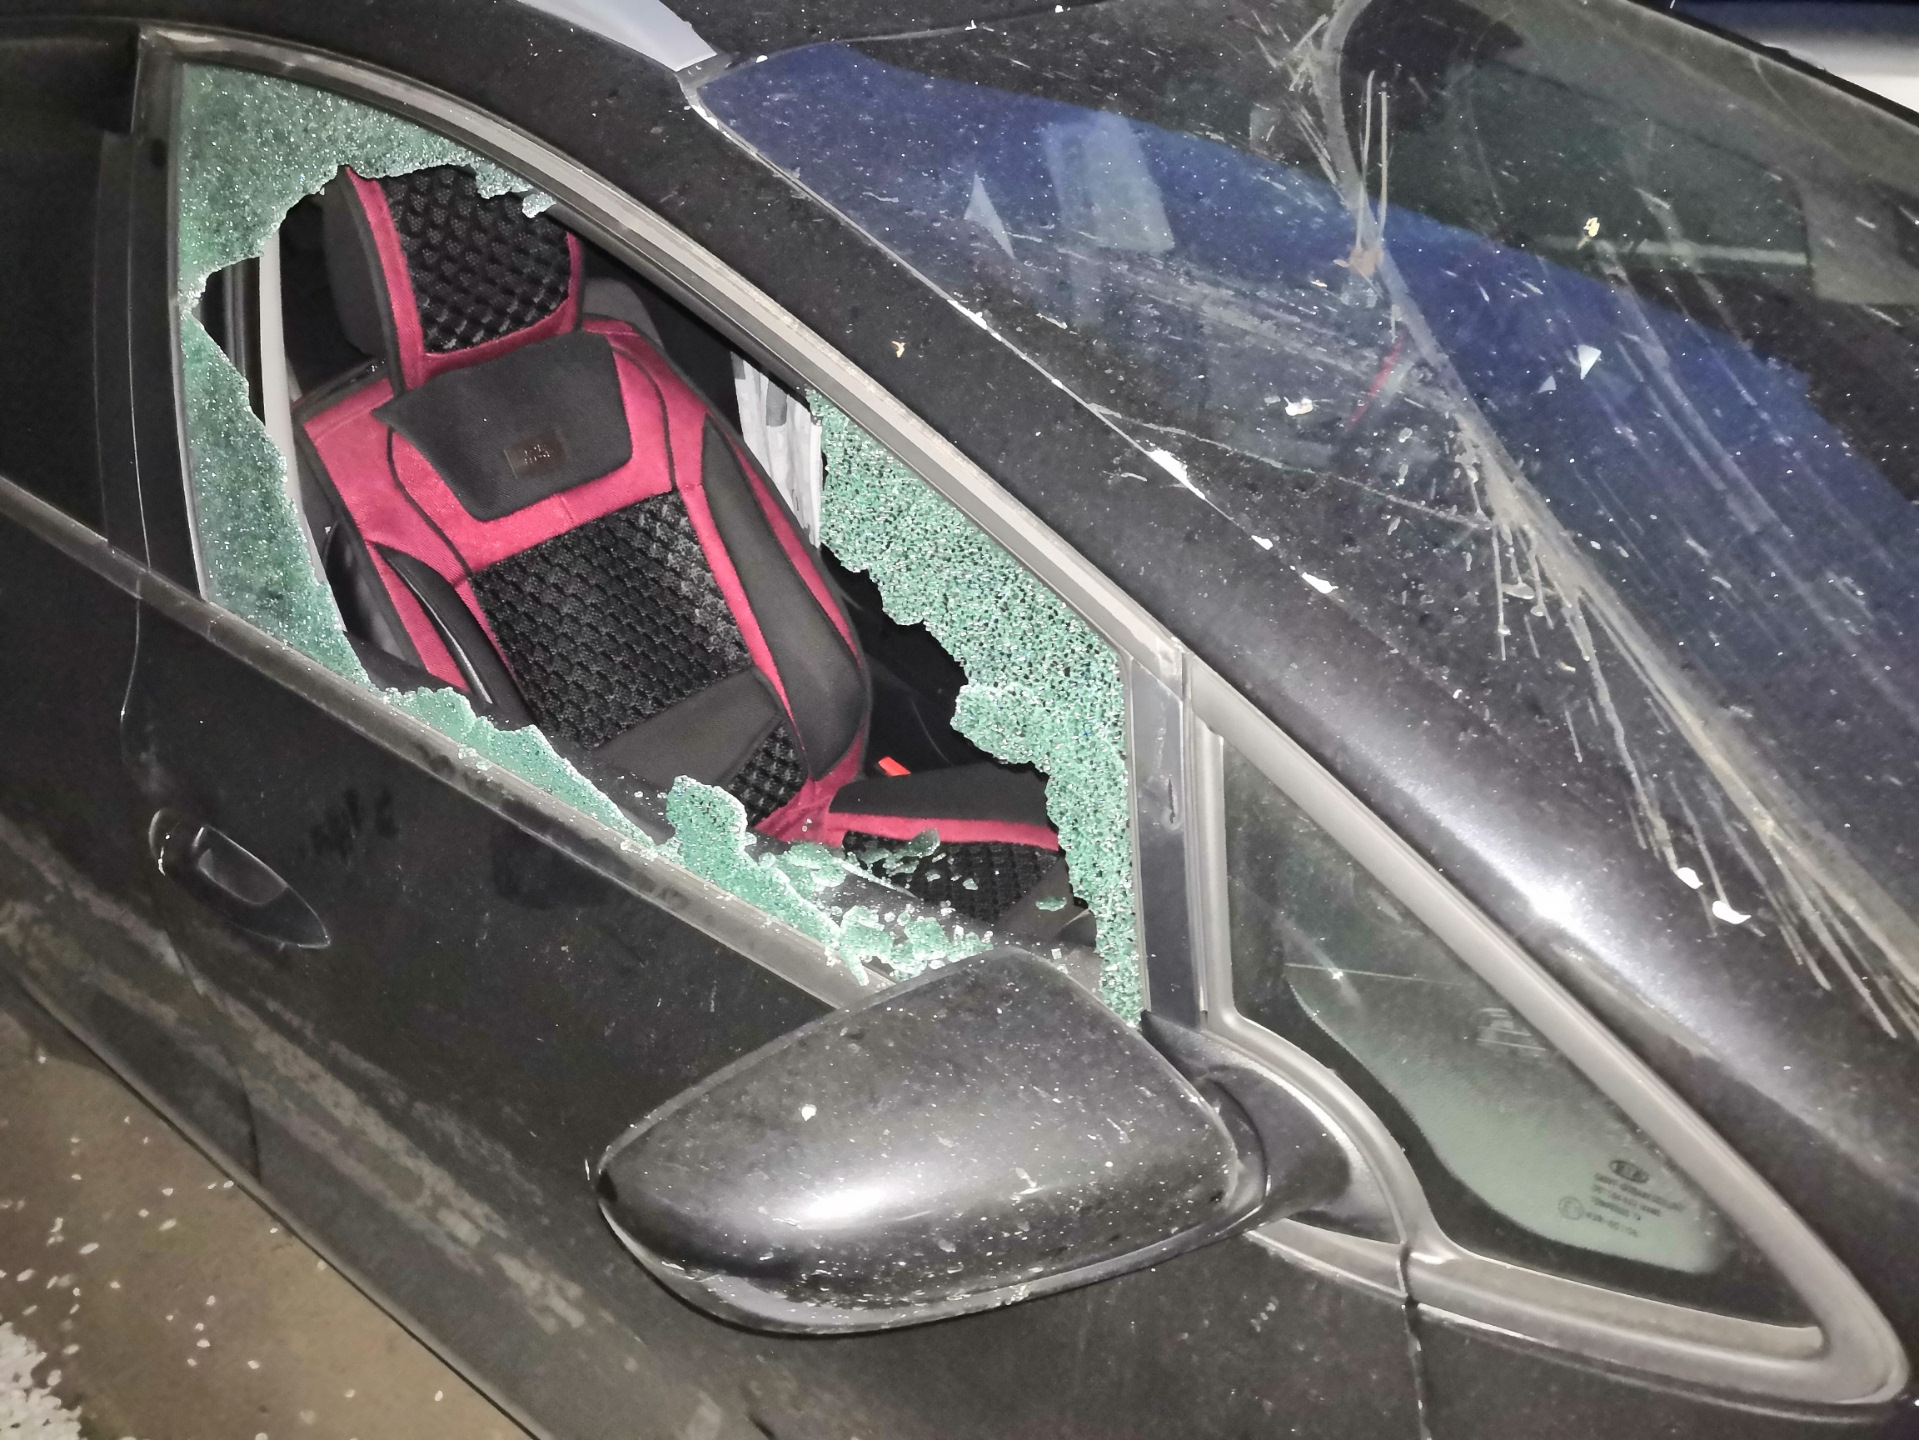 Разбили стекло на двери. Меган 2 с разбитым водительским стеклом. Разбитое лобовое стекло. Разбили стекло в машине. Разбить стекло.